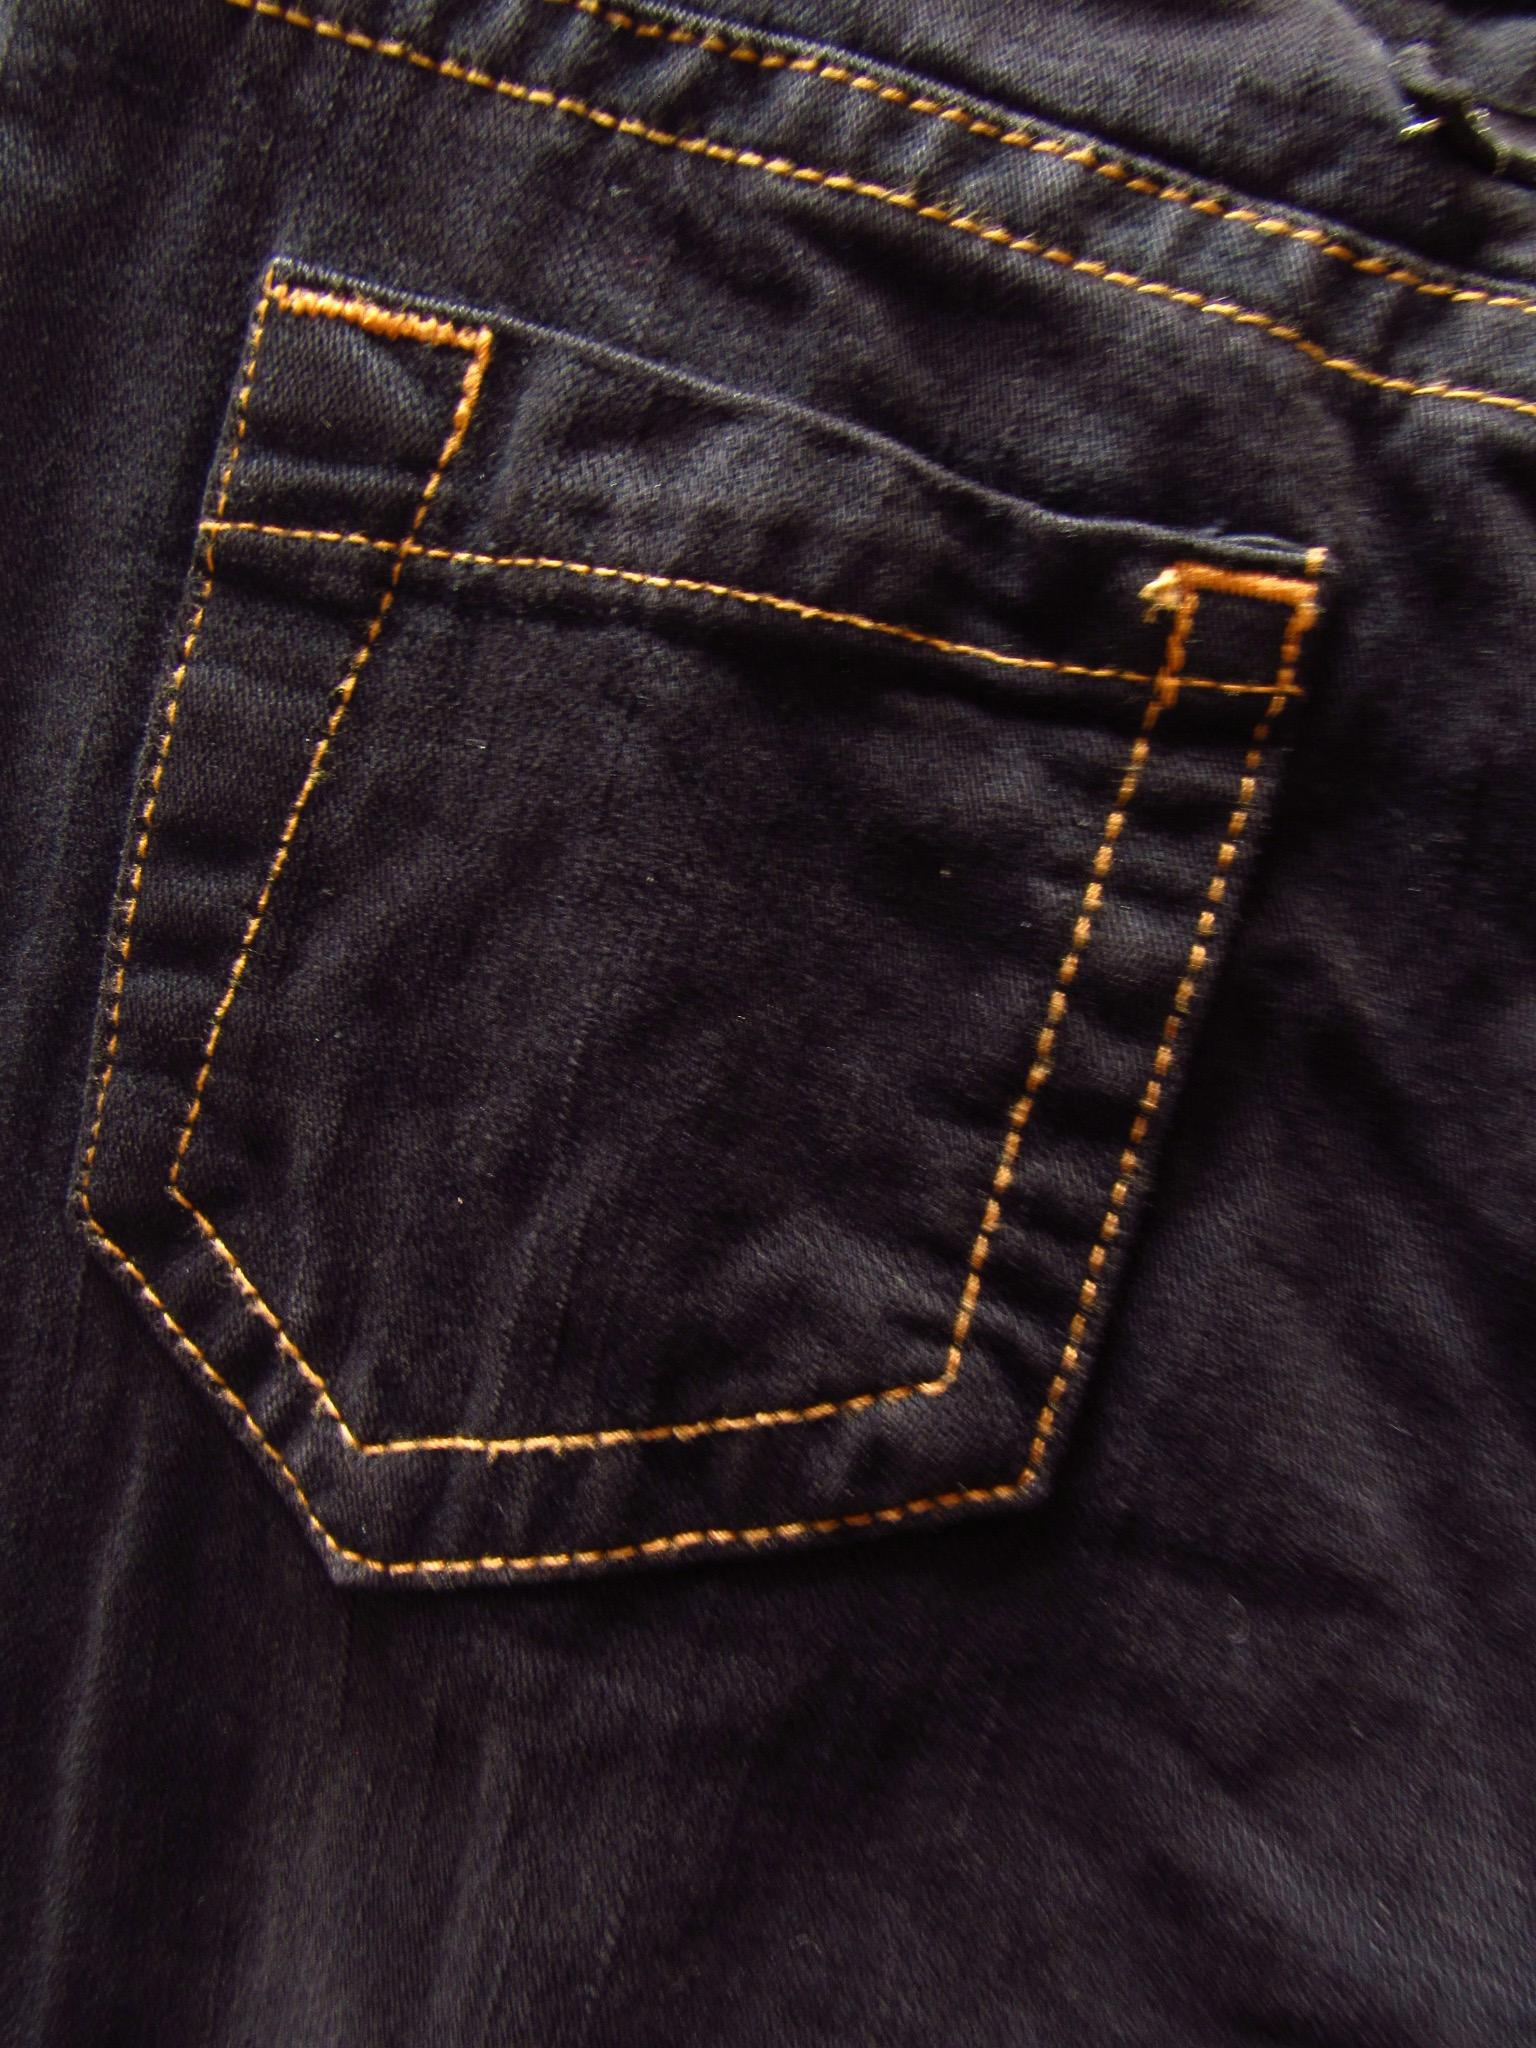 Jean Paul Gaultier Dark Denim Jeans In New Condition For Sale In Laguna Beach, CA